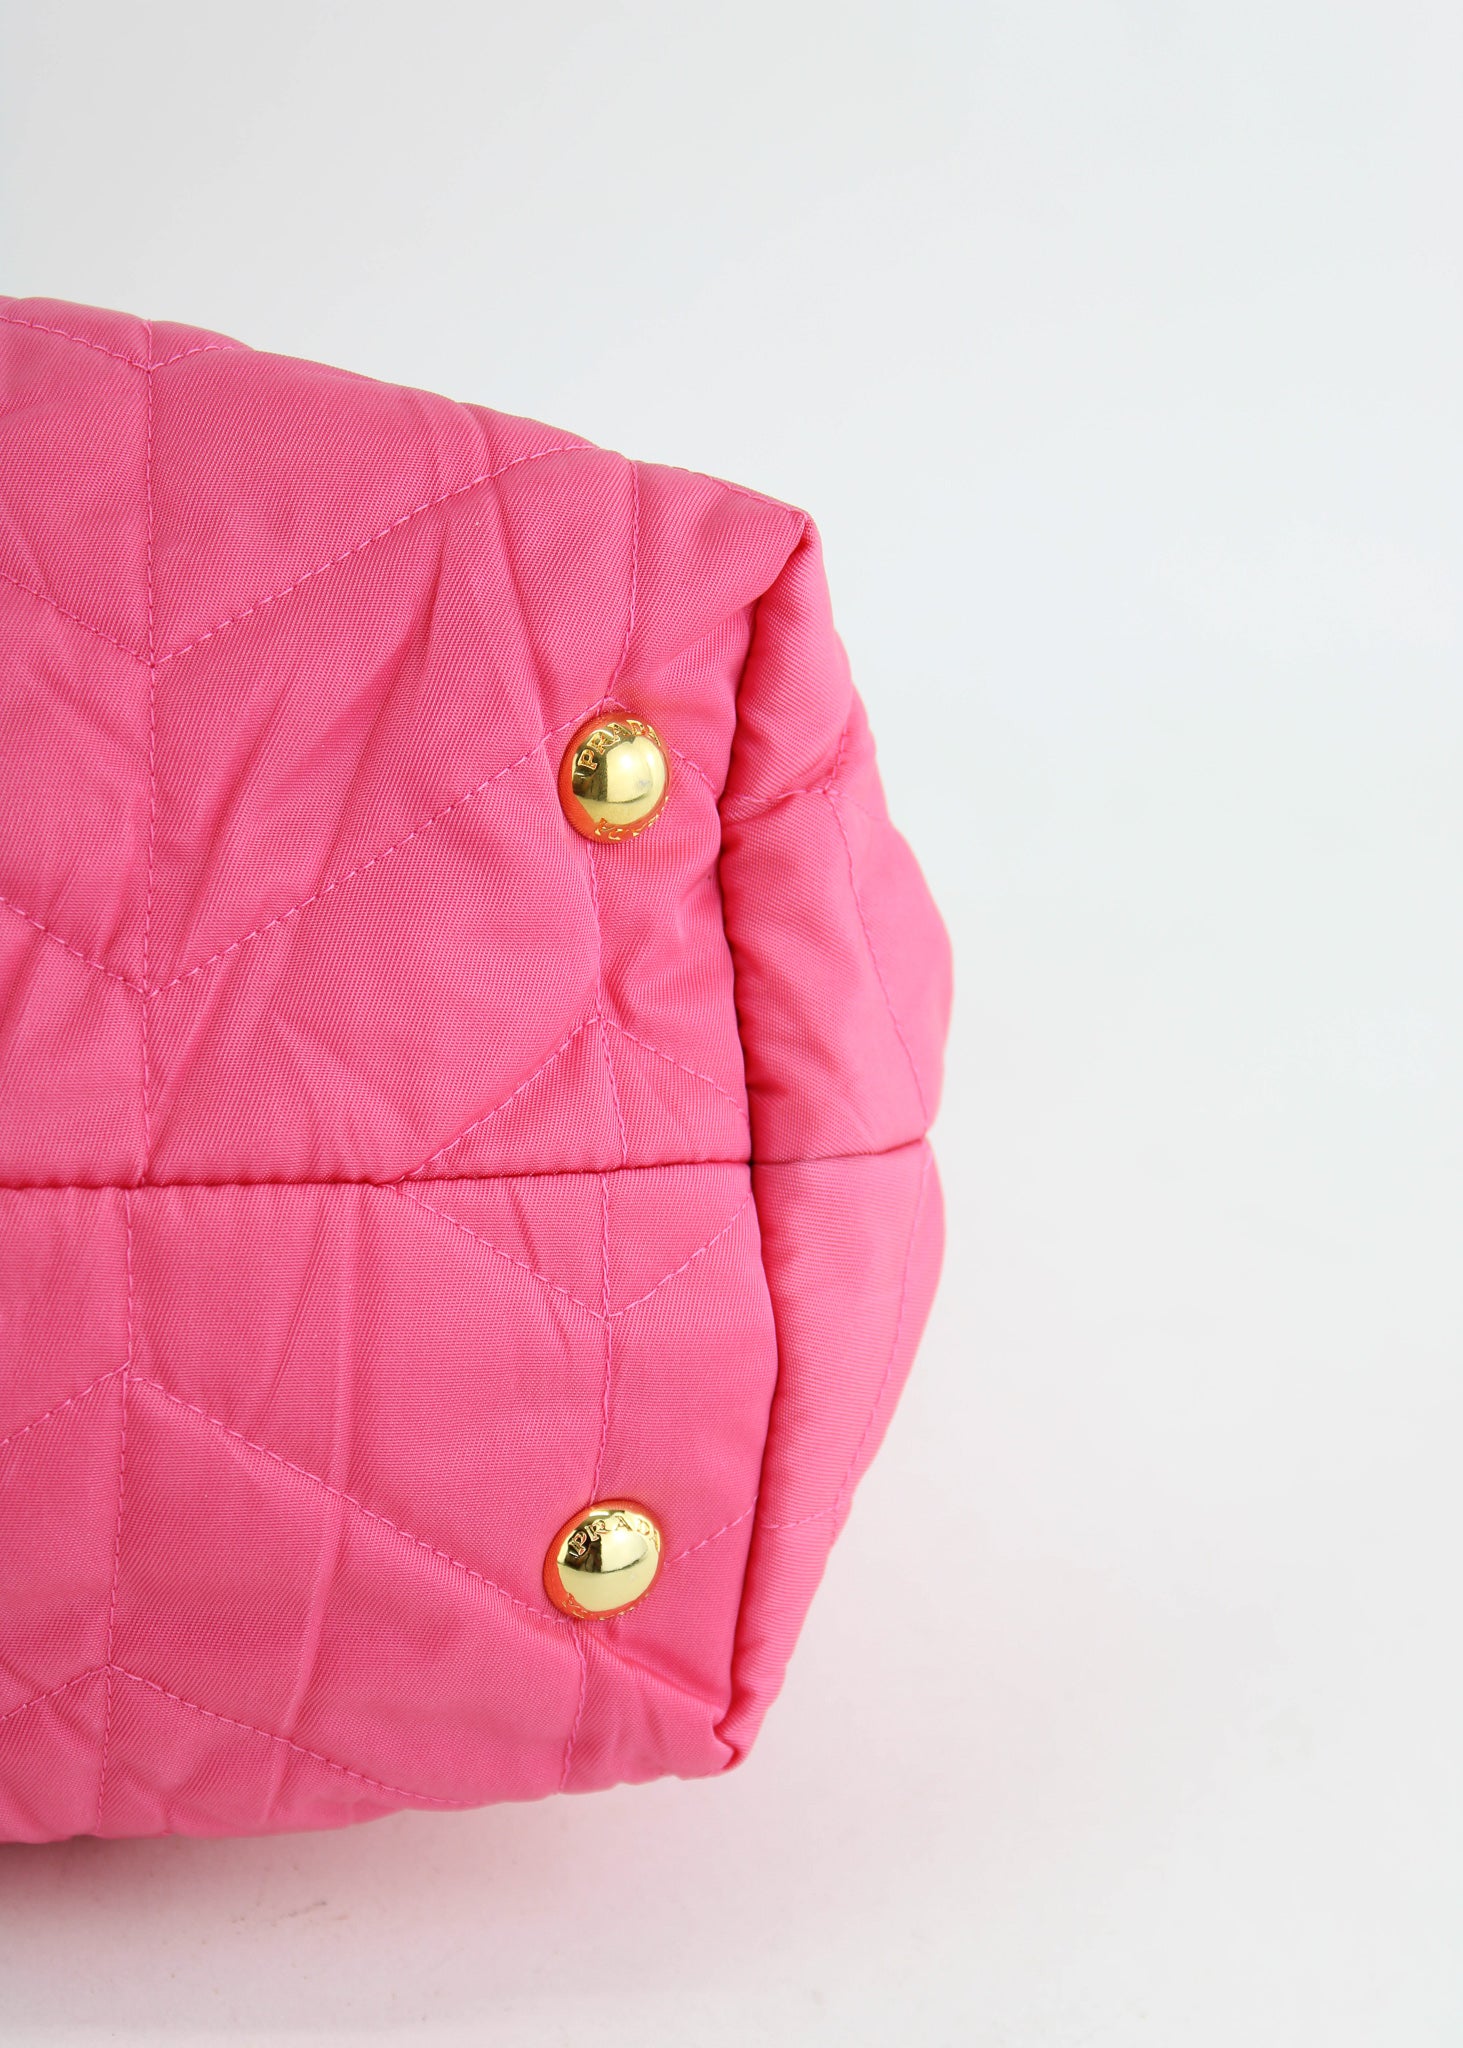 Prada Nylon Leather Chain Tote Pink – DAC